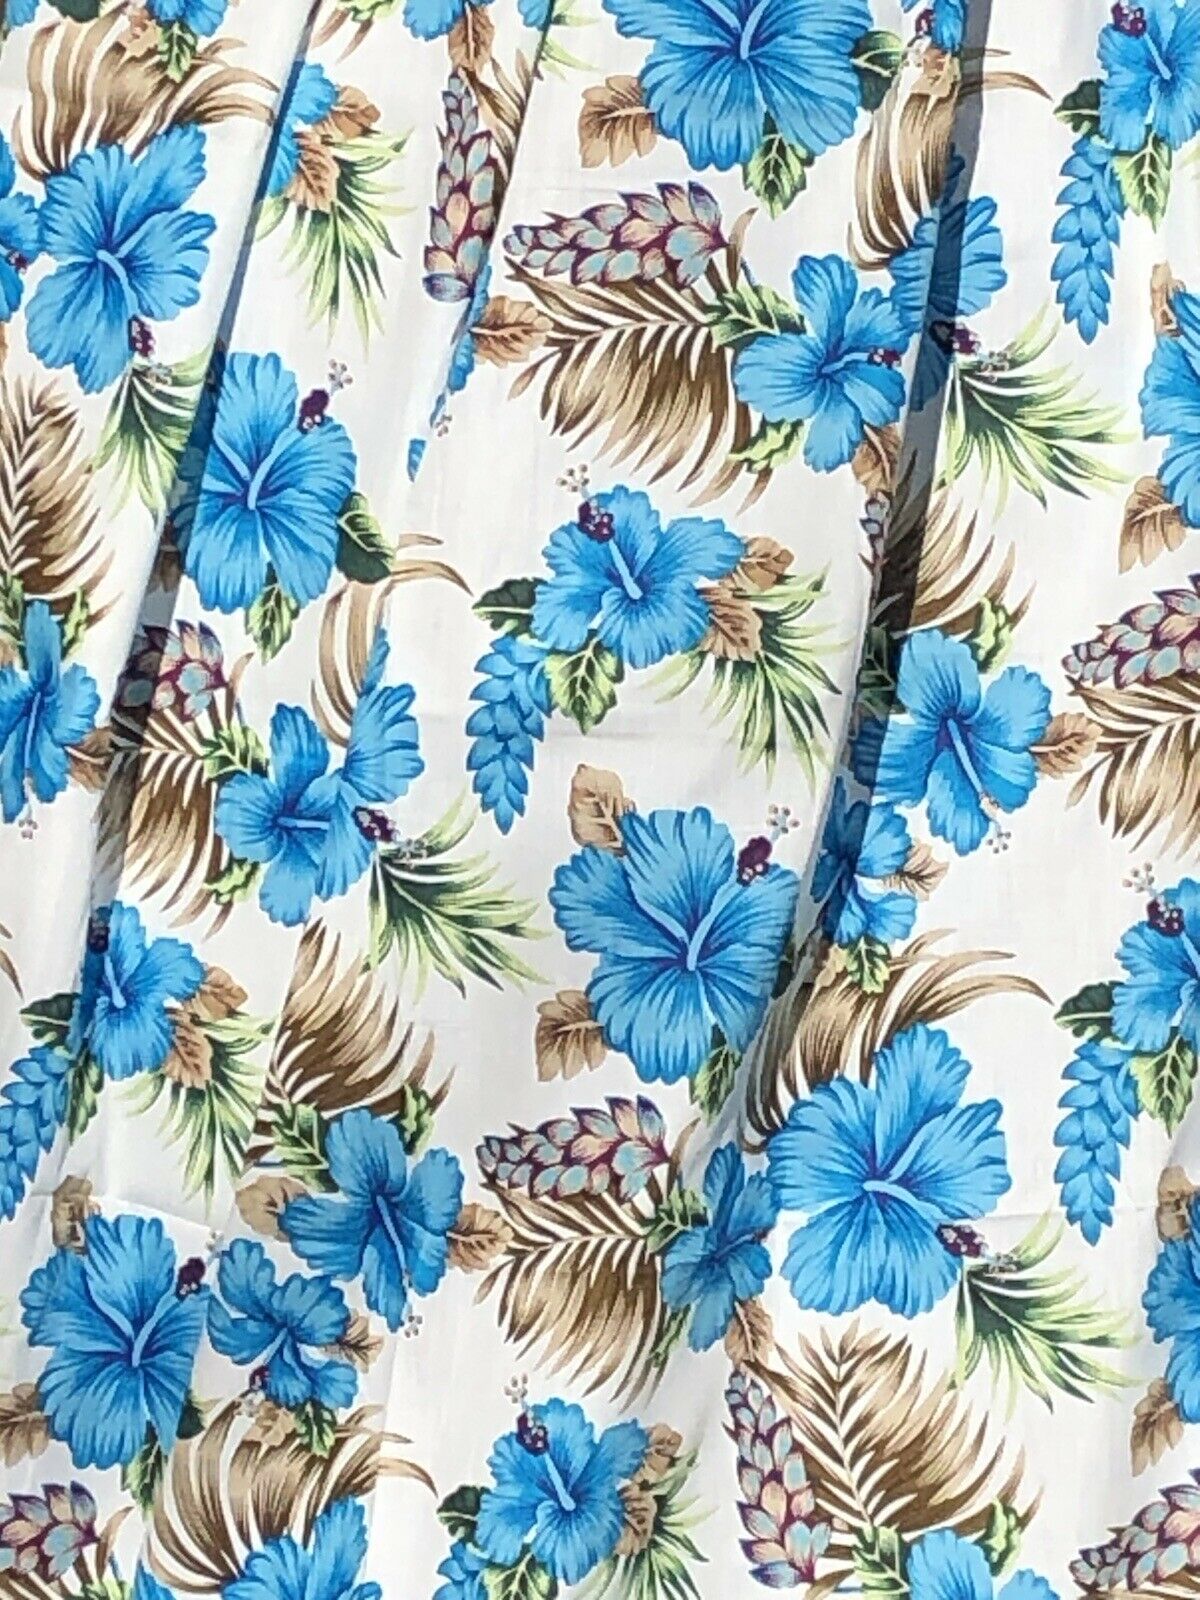 Blue Hibiscus Flower Cotton Fabric.